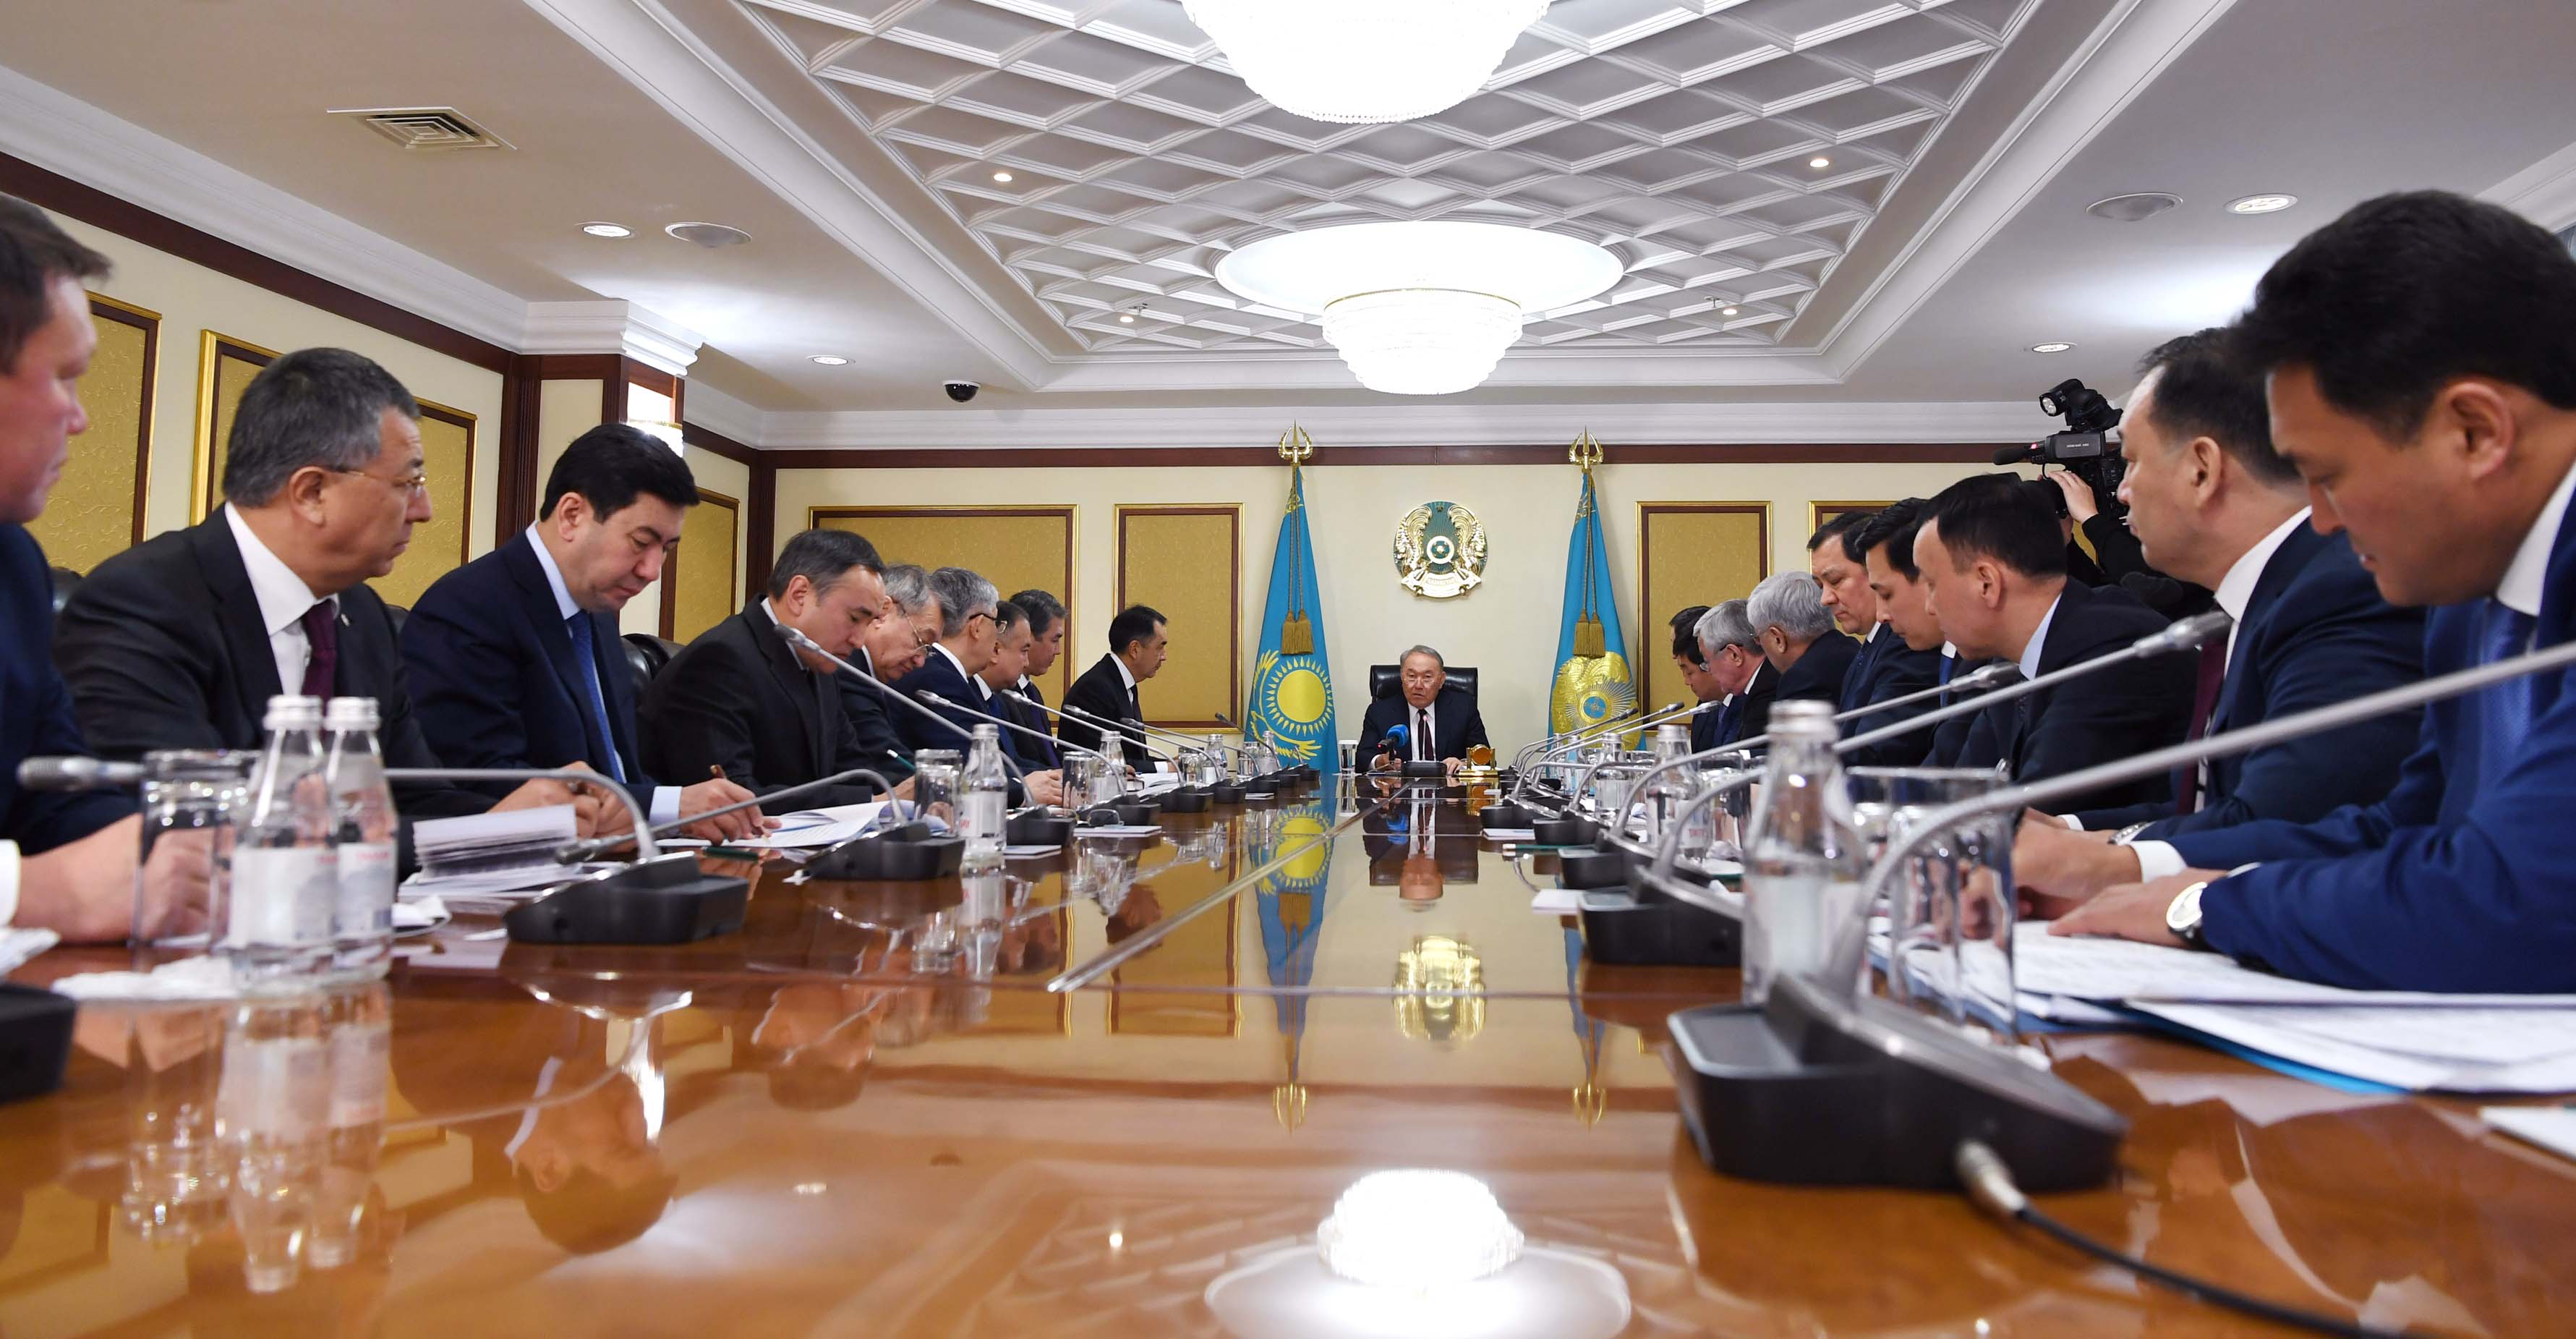 Kazakh President met with akims of Astana, Almaty and regions